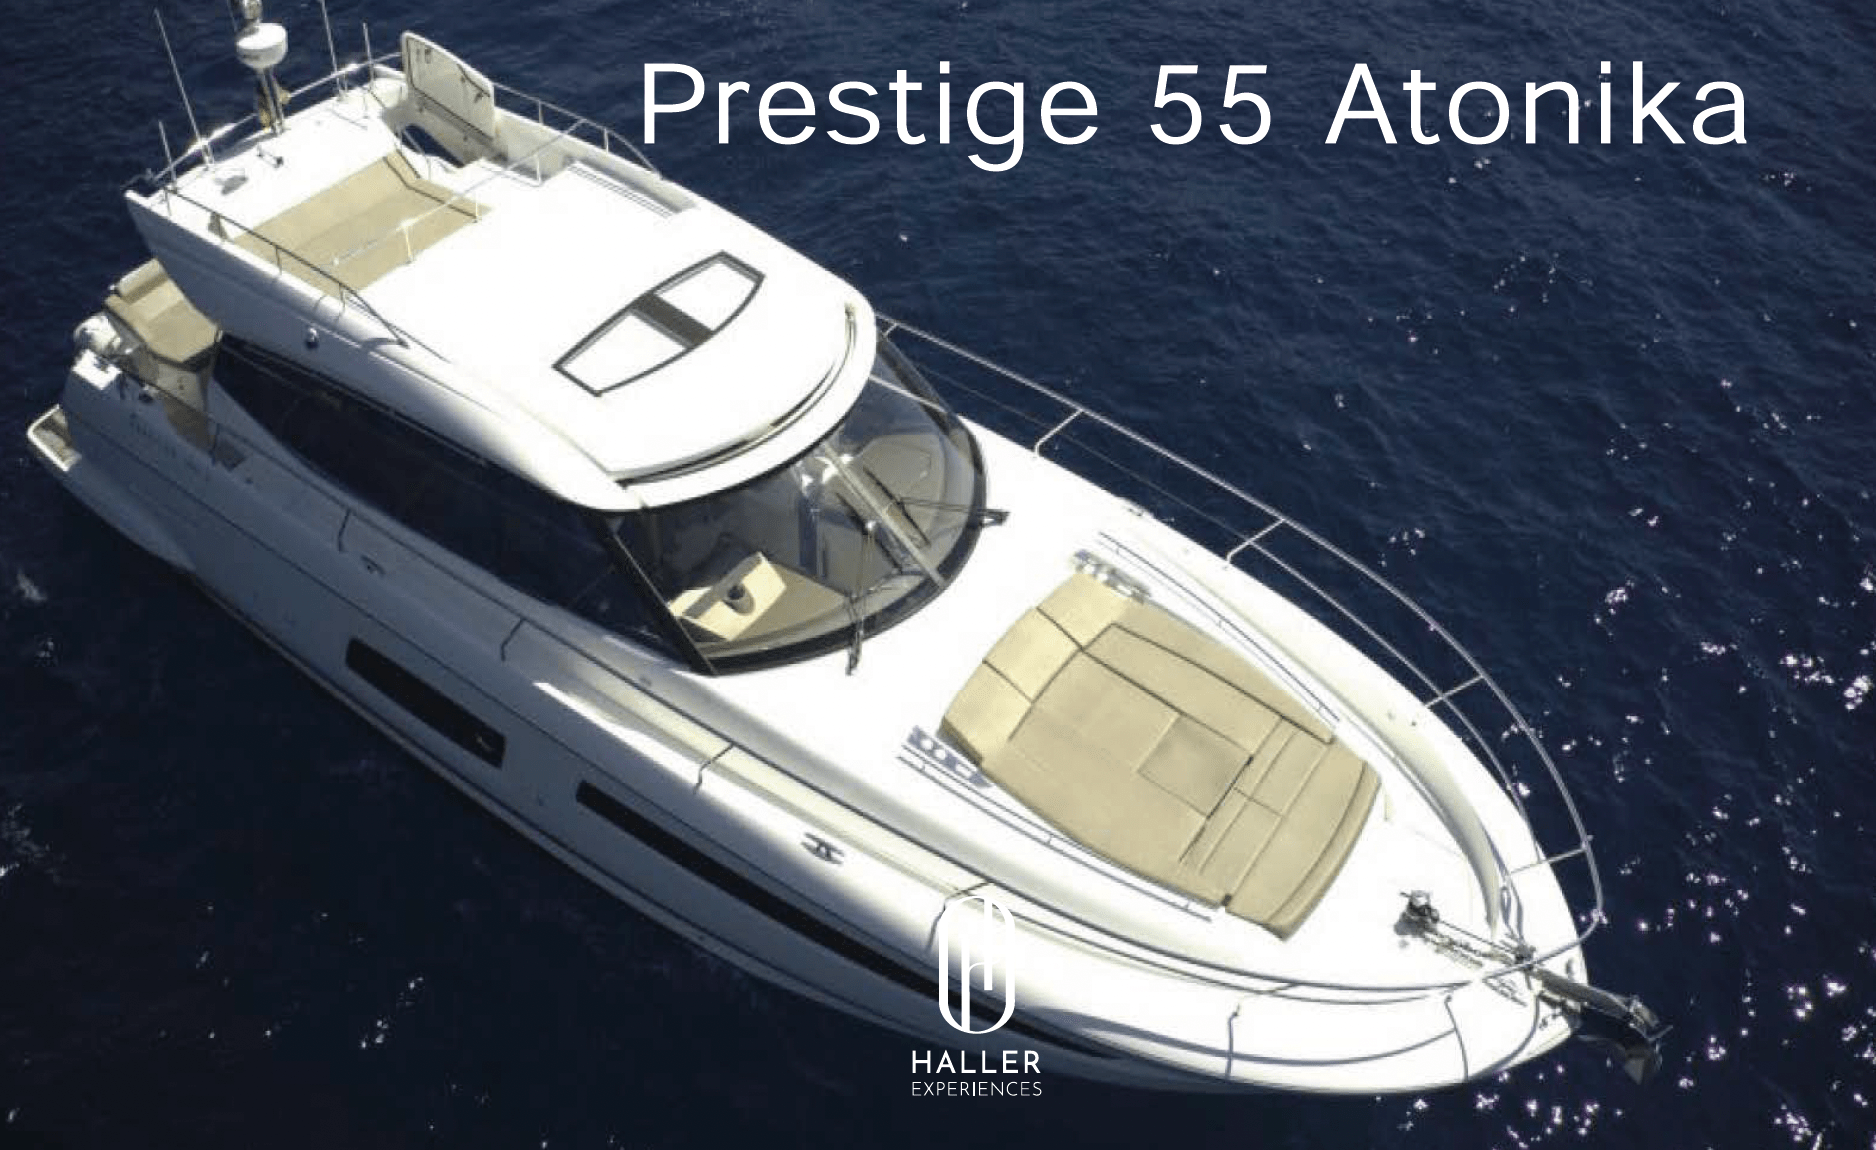 Prestige 55 Atonika - Haller Experiences